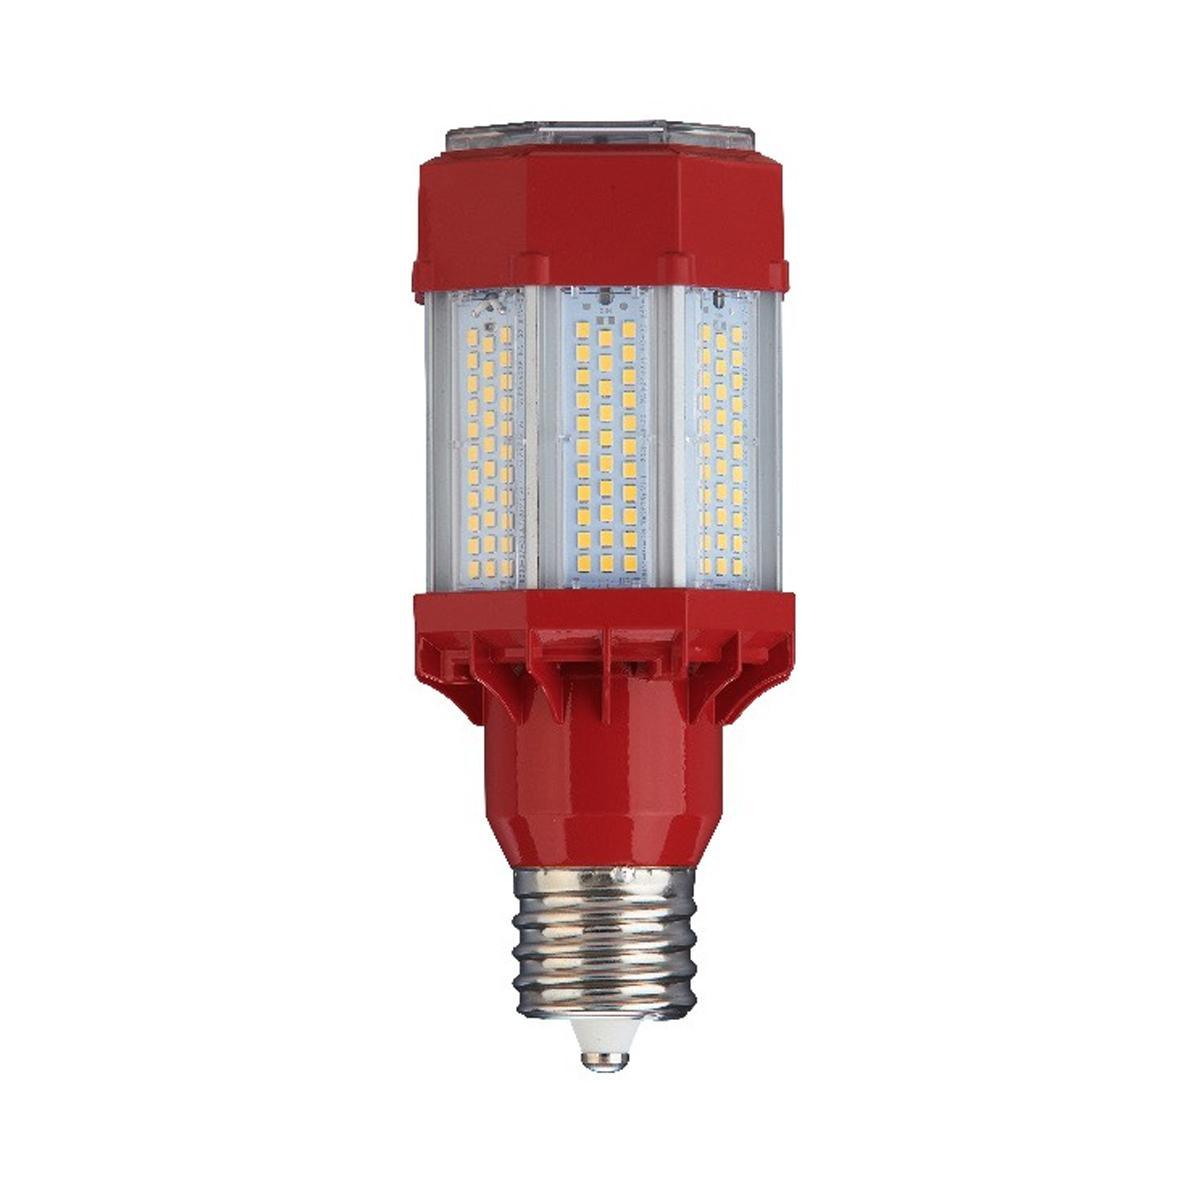 LED Corn Retrofit Lamp, 45W, 6620 Lumens, 5000K, EX39 Mogul Extended Mogul Base, 120-277V